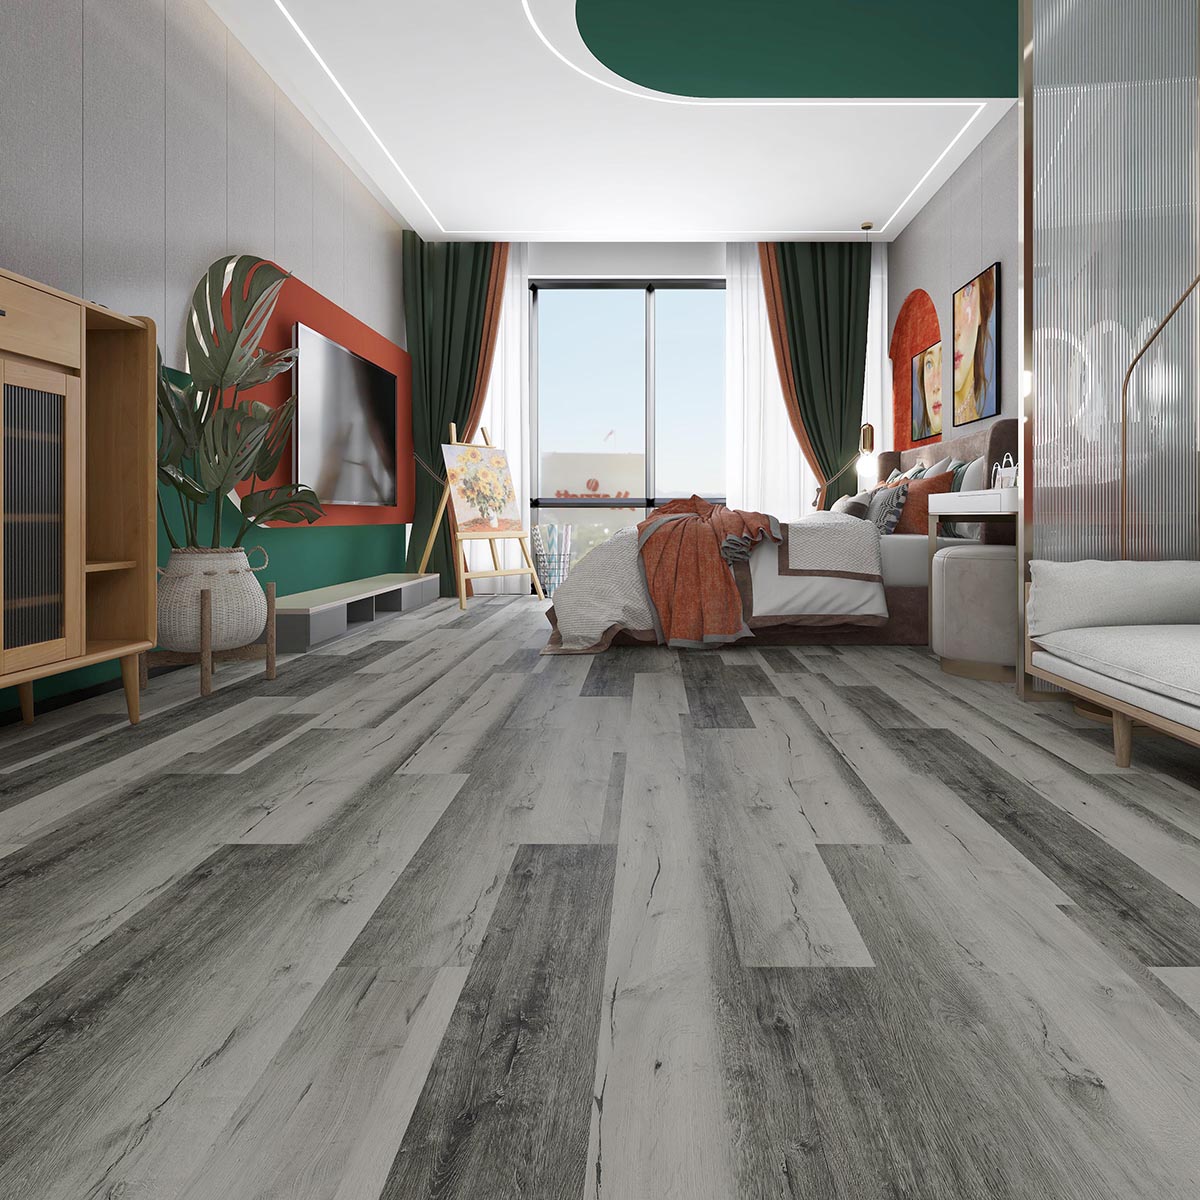 2021 wholesale price Spc Vinyl Flooring Planks Click – SPC flooring balances style and functionality – TopJoy